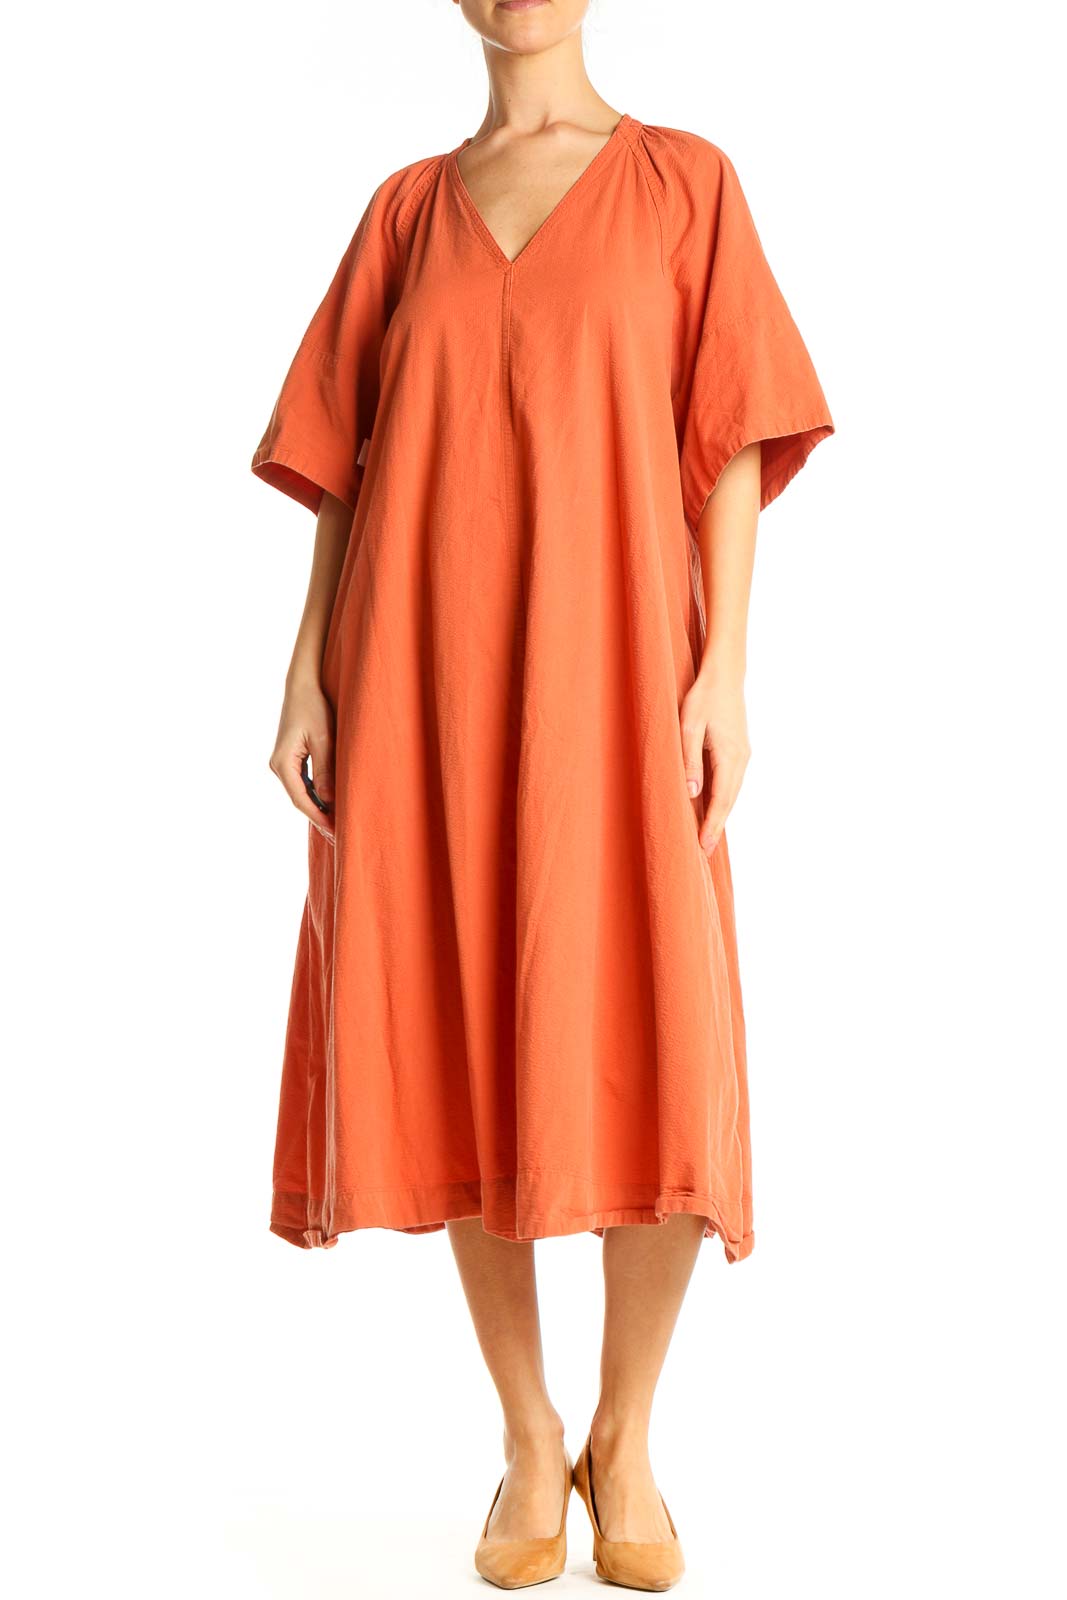 Orange Solid Day Dress Front